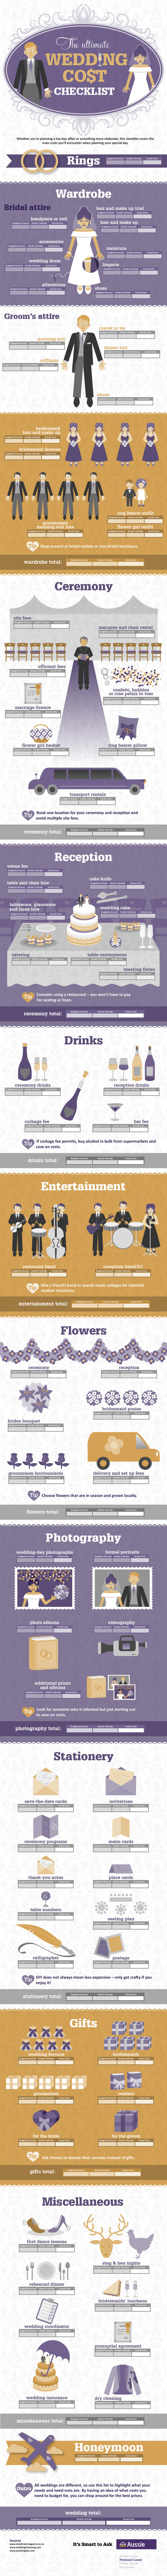  infographic-wedding-planning-checklist-reception-ceremony-to-do